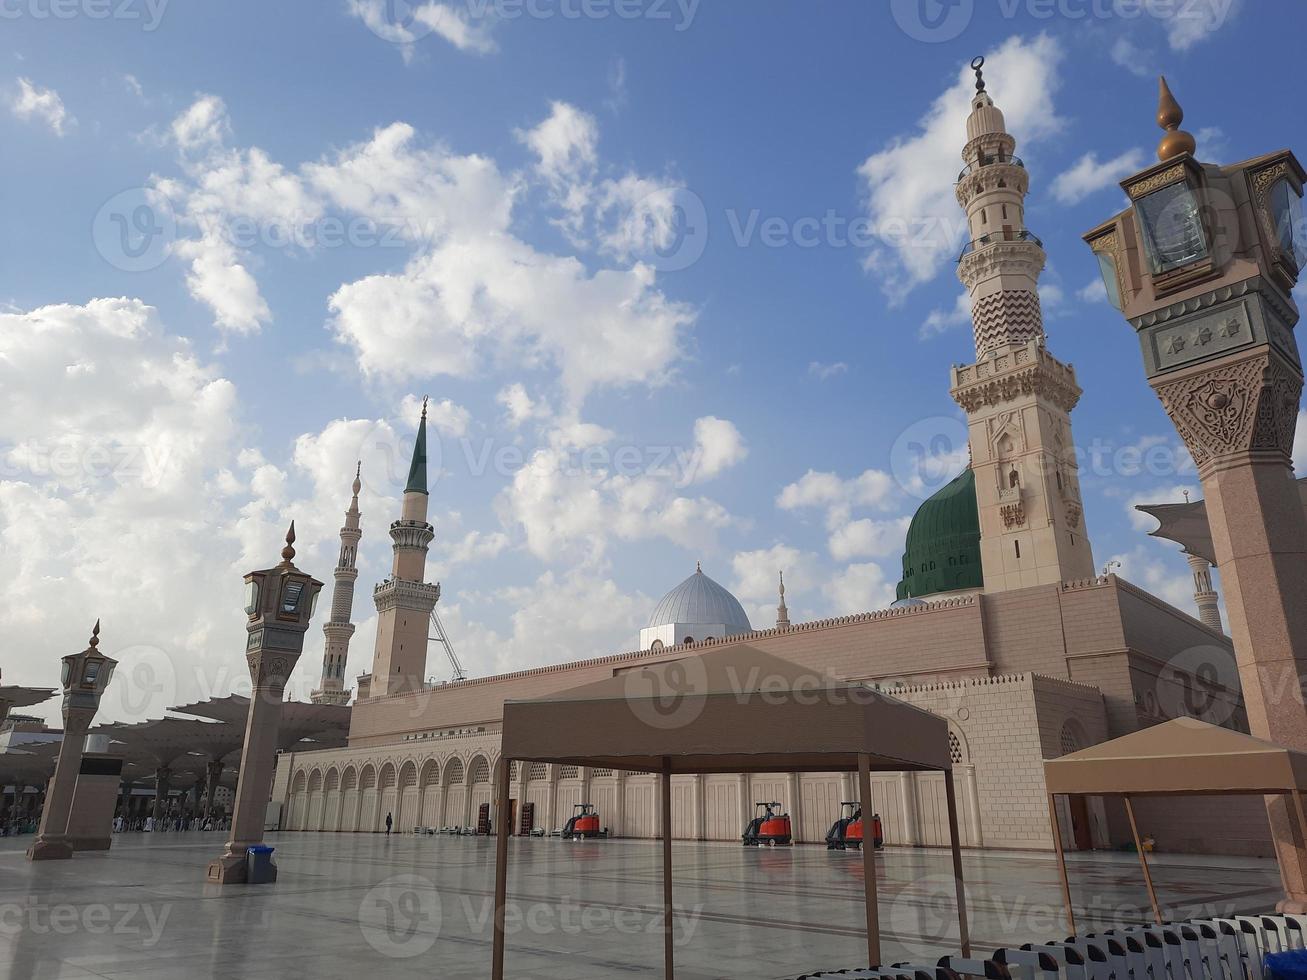 hermosa vista diurna de la mezquita del profeta - masjid al nabawi, medina, arabia saudita. foto